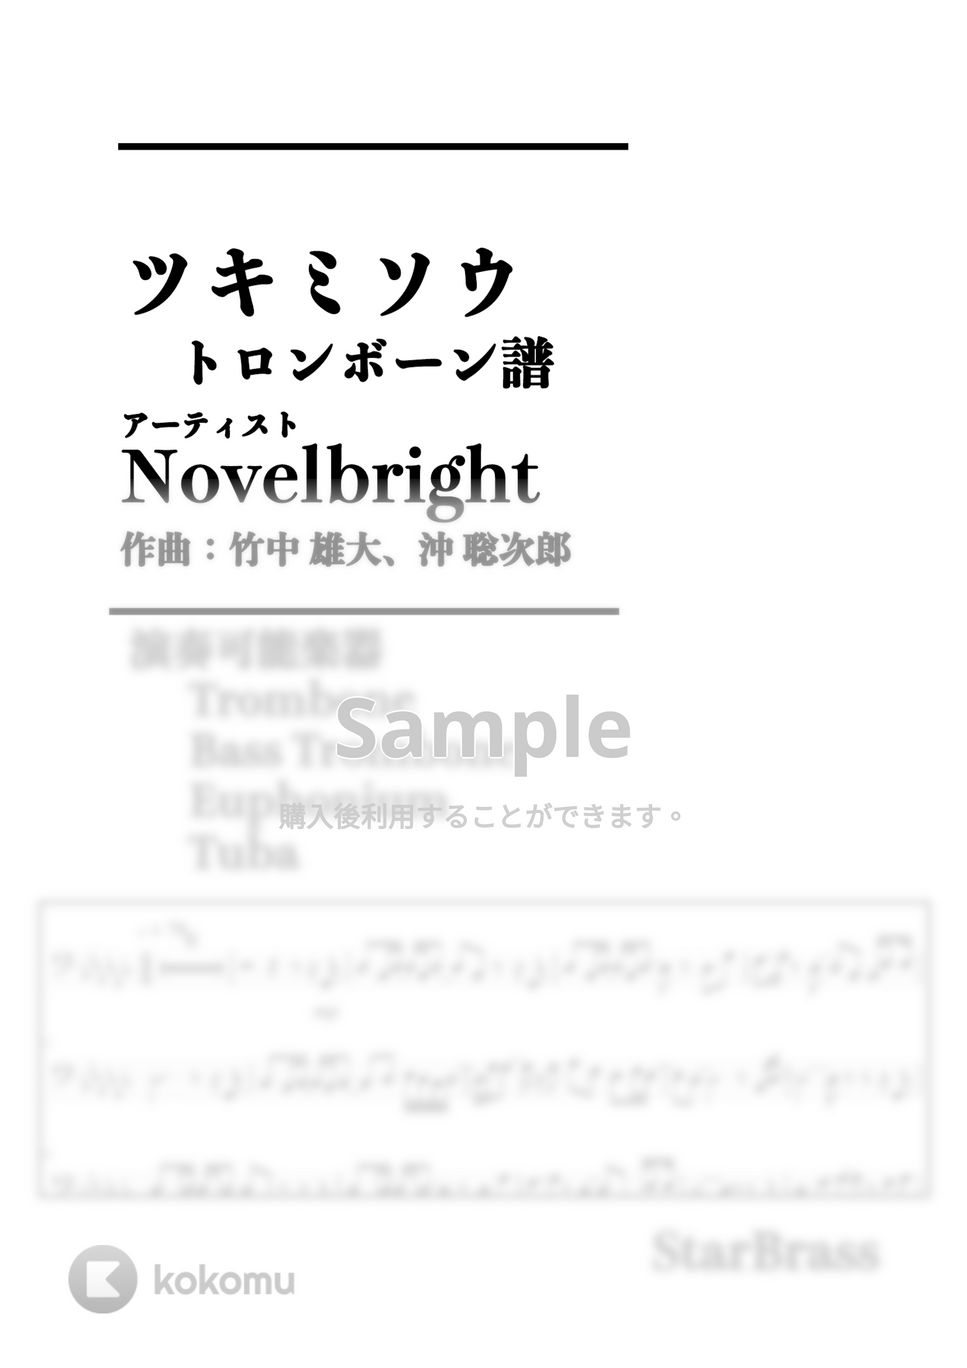 Novelbright 竹中 雄大 - ツキミソウ (-Trombone Solo- 原キー) by Creampuff